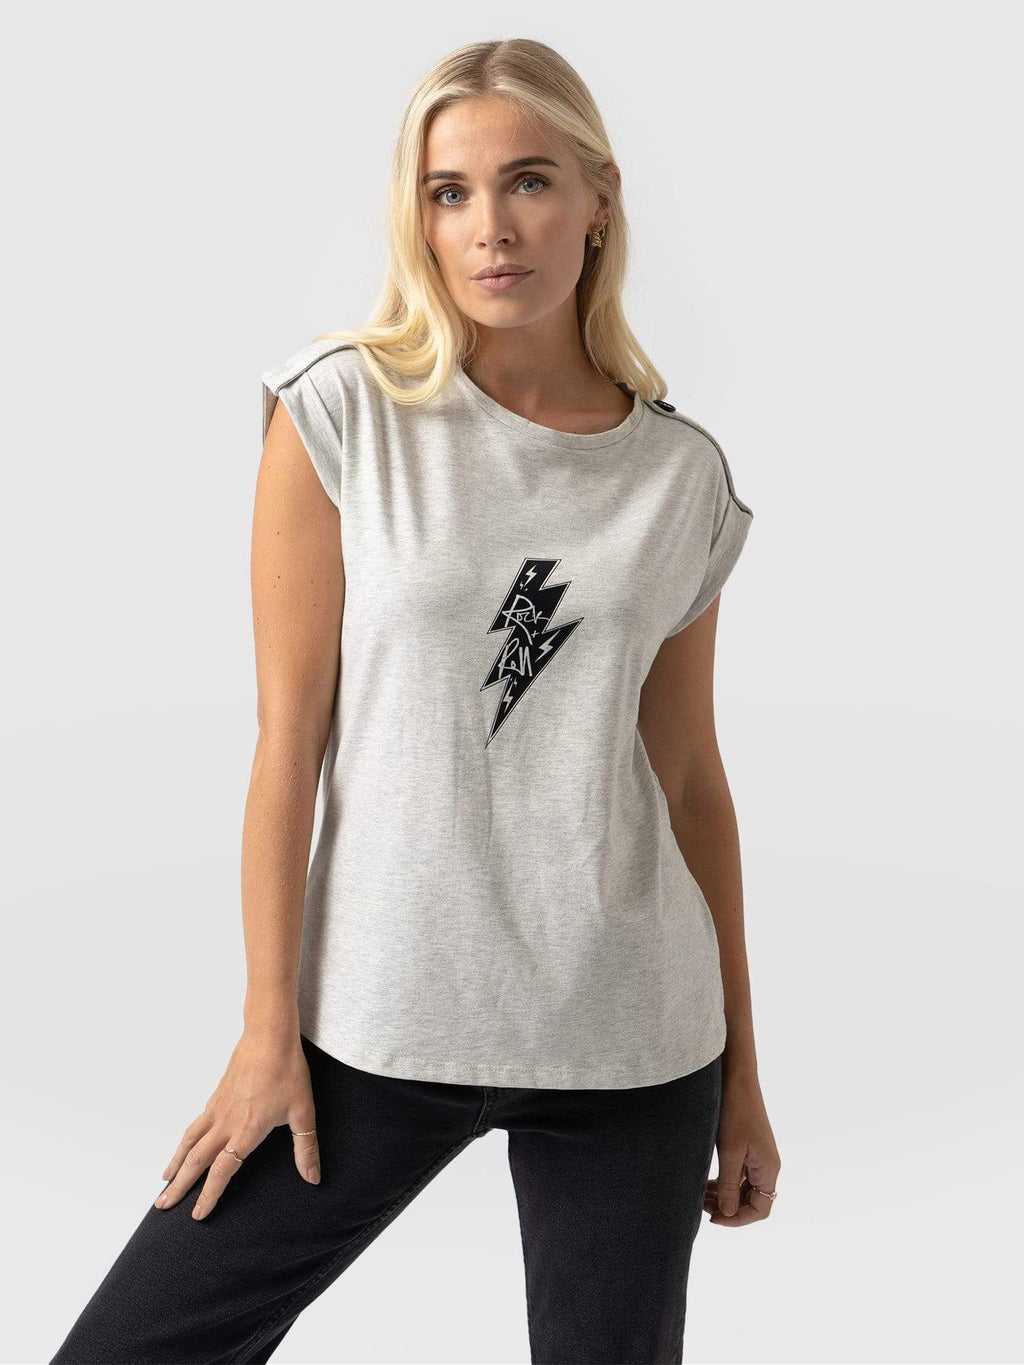 Turn-Up Tee Grey Rock - Women's T-Shirts | Saint Sofia® UK